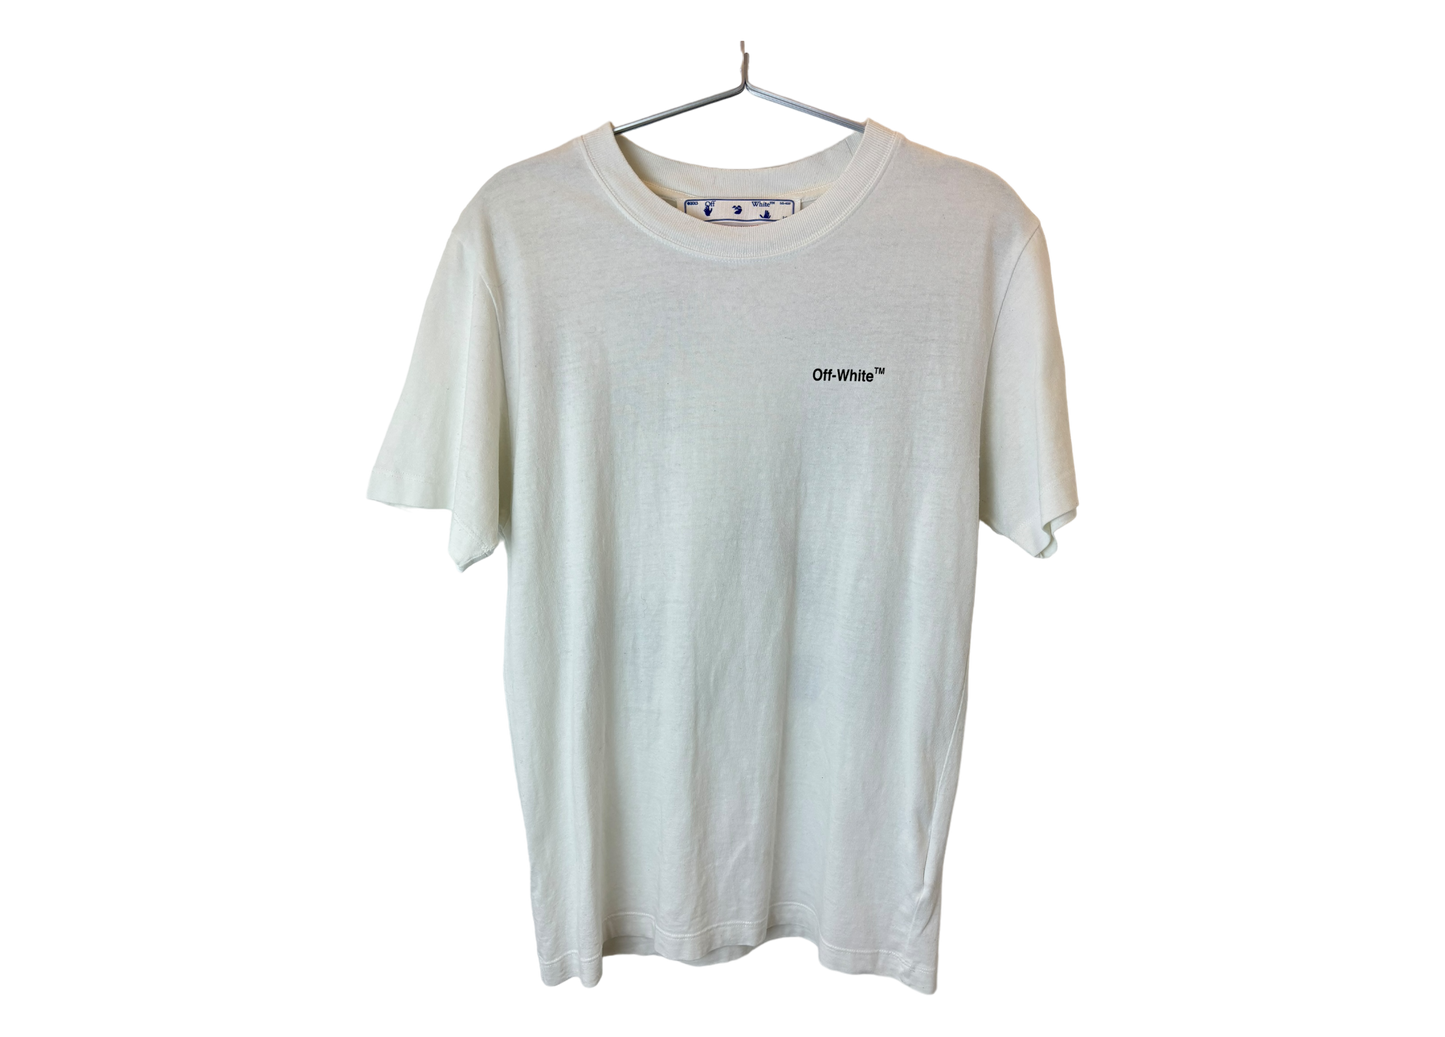 Off-White T-shirt White COND 8.8/10